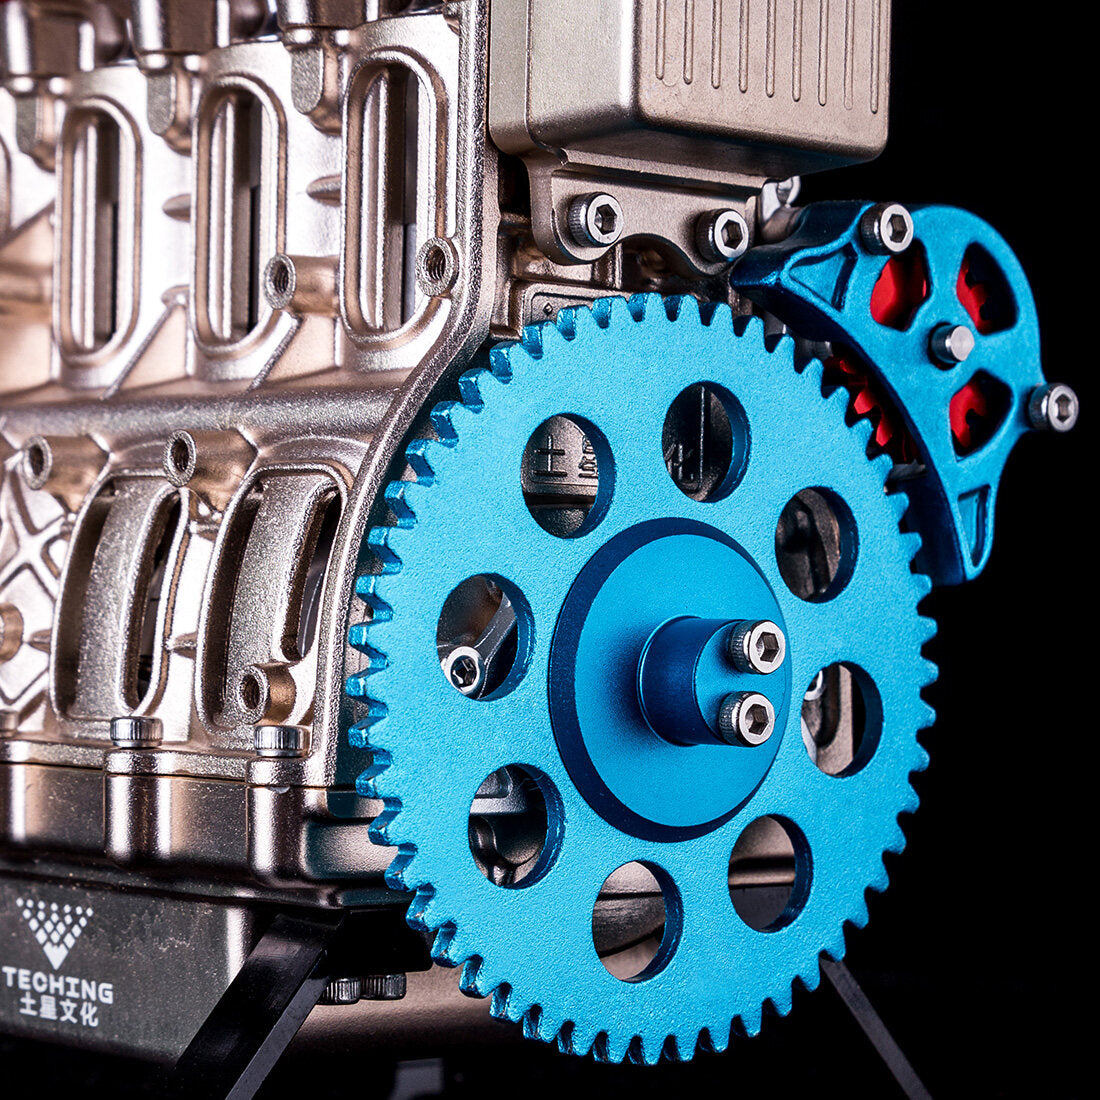 TECHING L4 Motor Modellbausatz, Der Funktioniert - 364 Teile